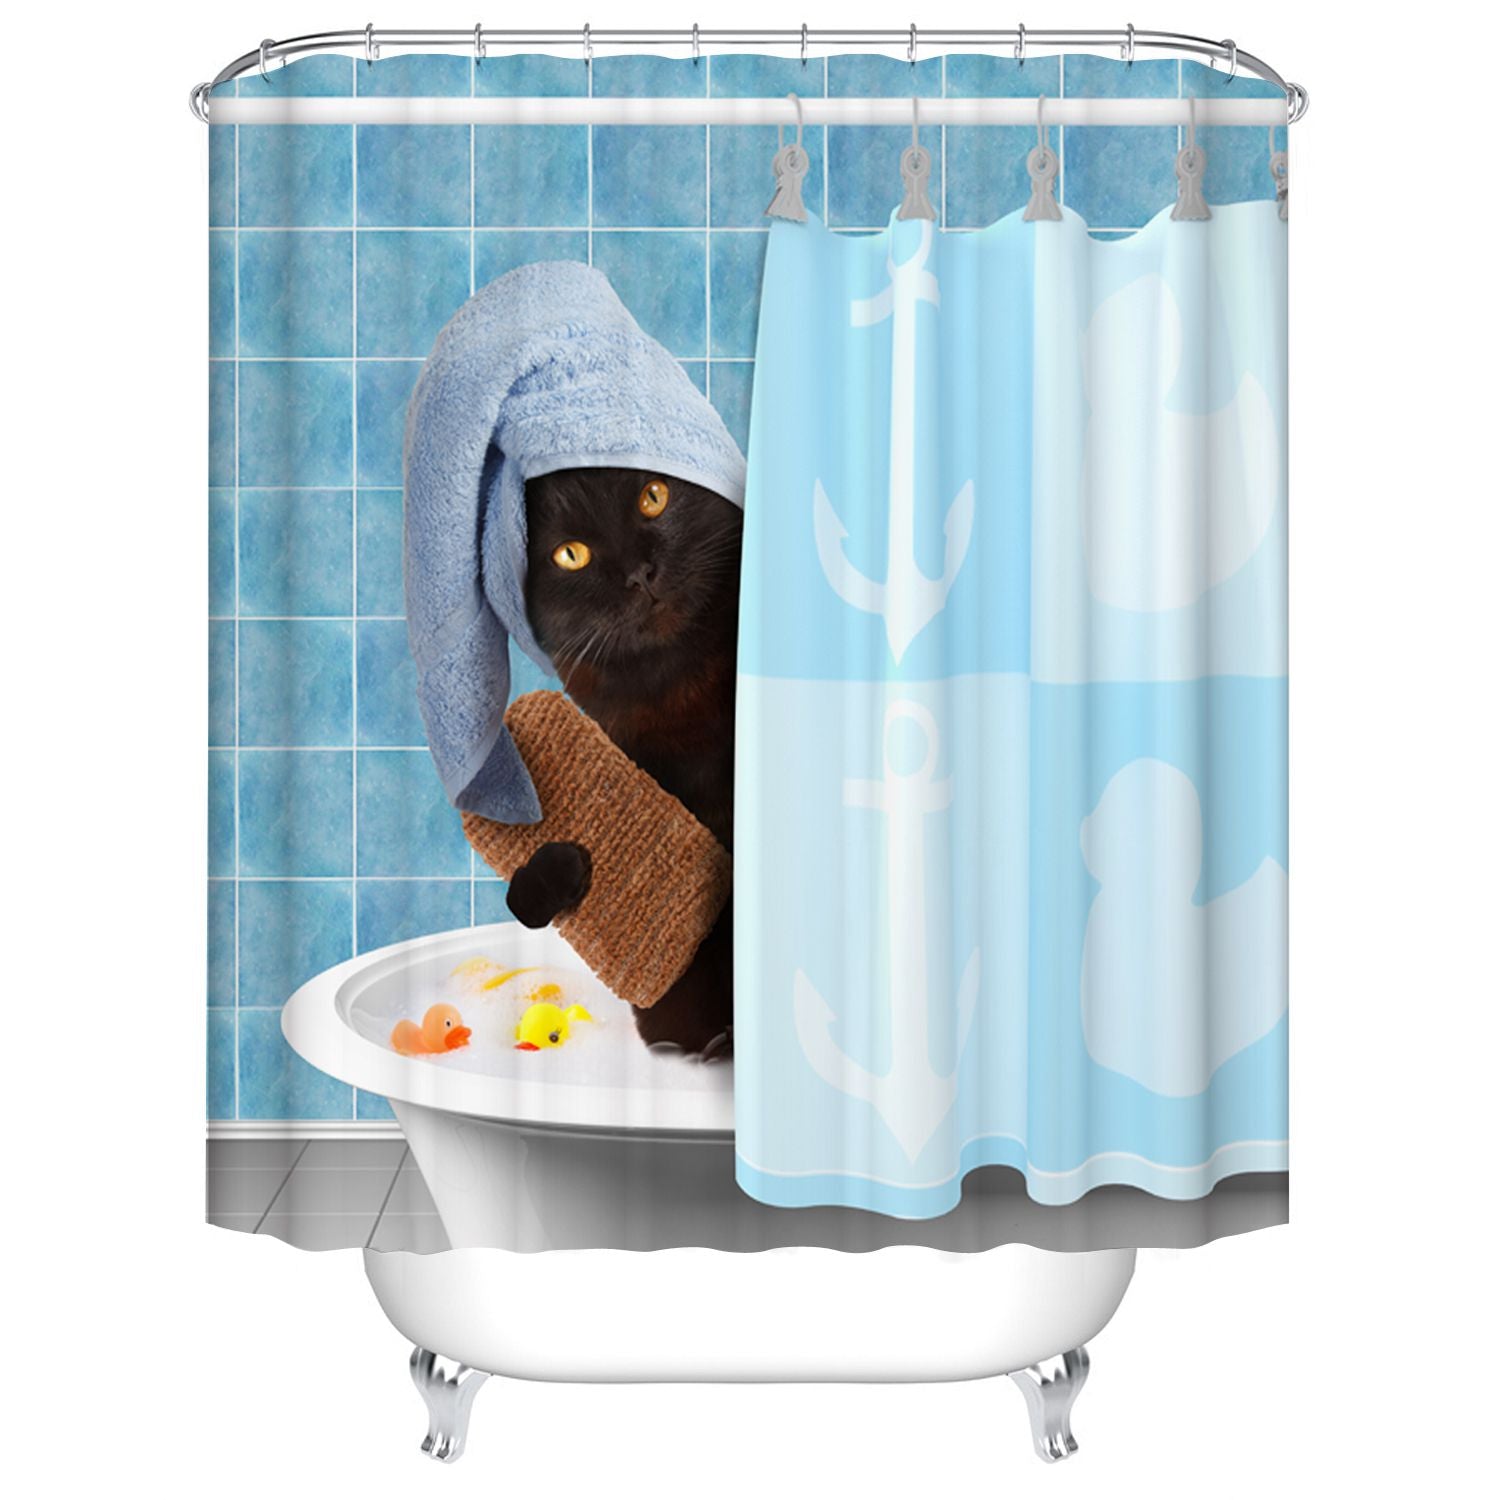 Black Cat Take A Bath Shower Curtain